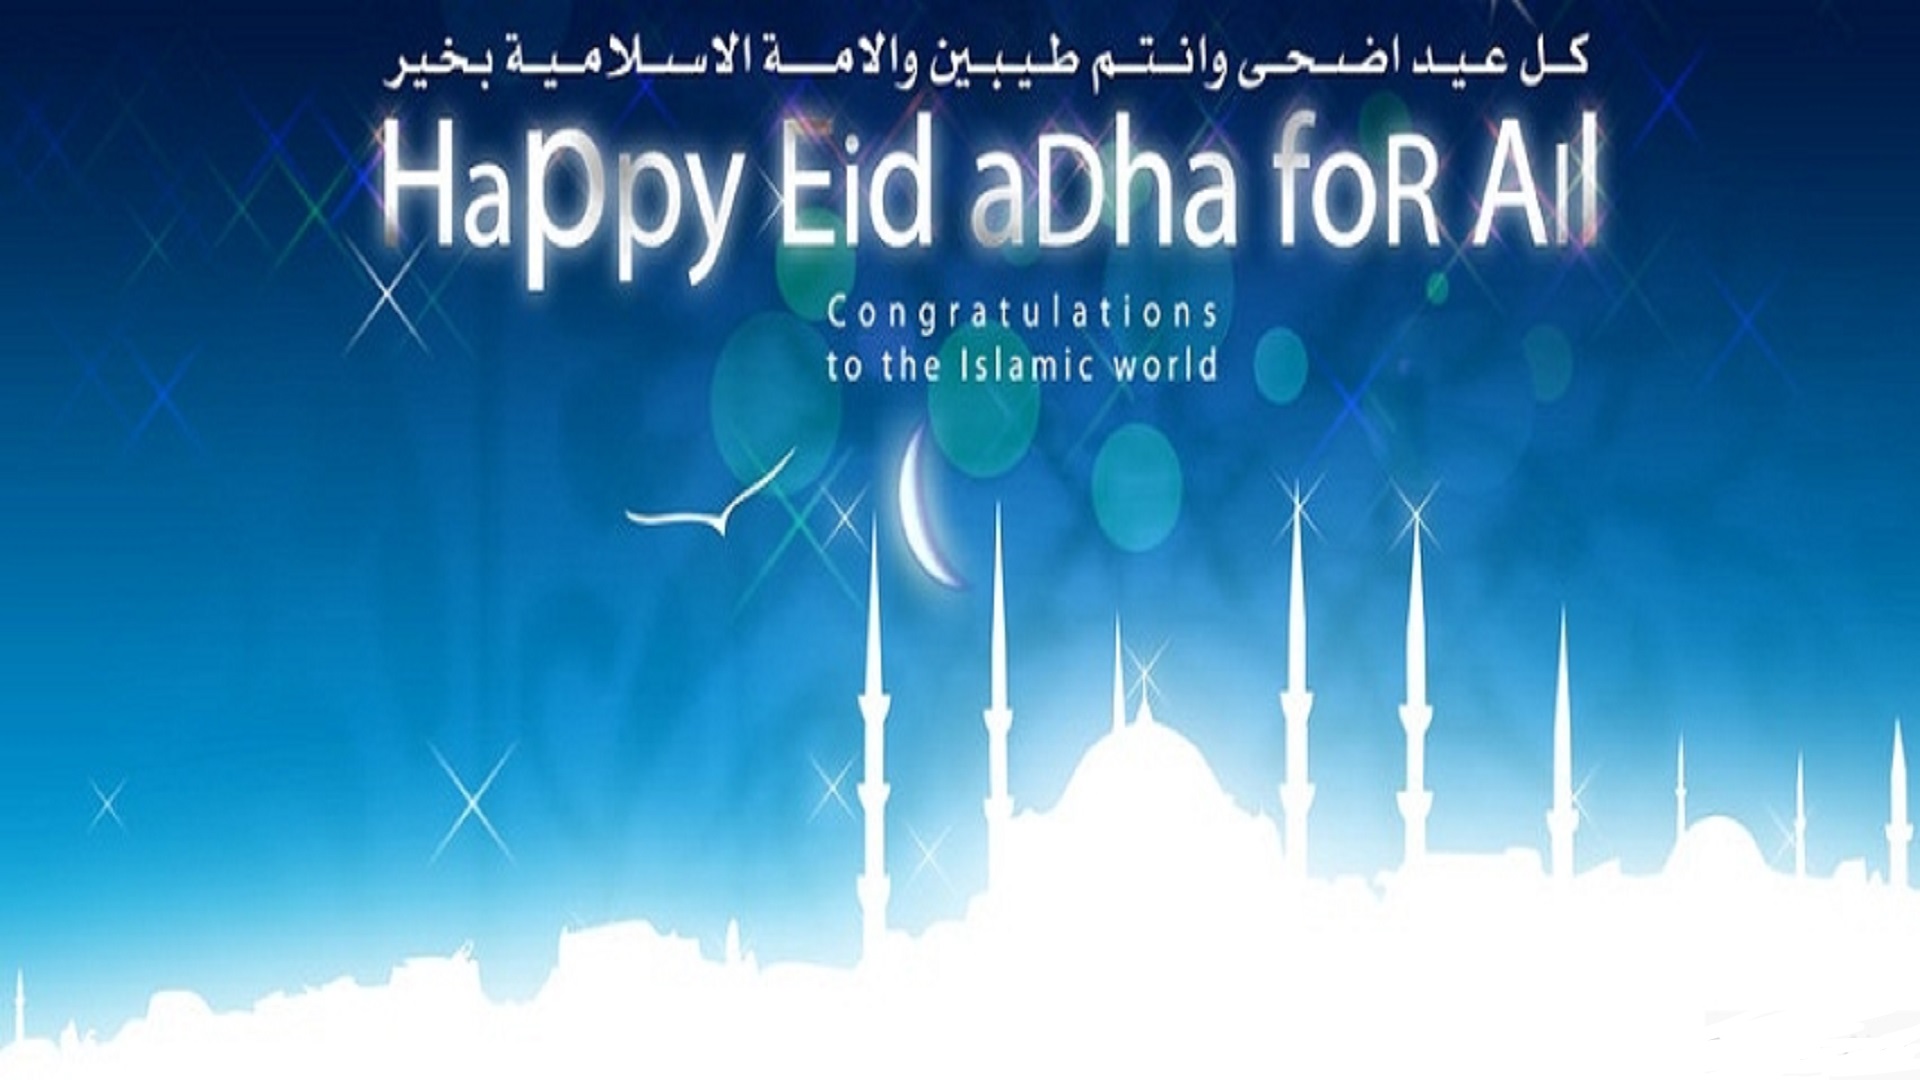 Eid Mubarak To All Free Mobile Hd Desktop Pictures